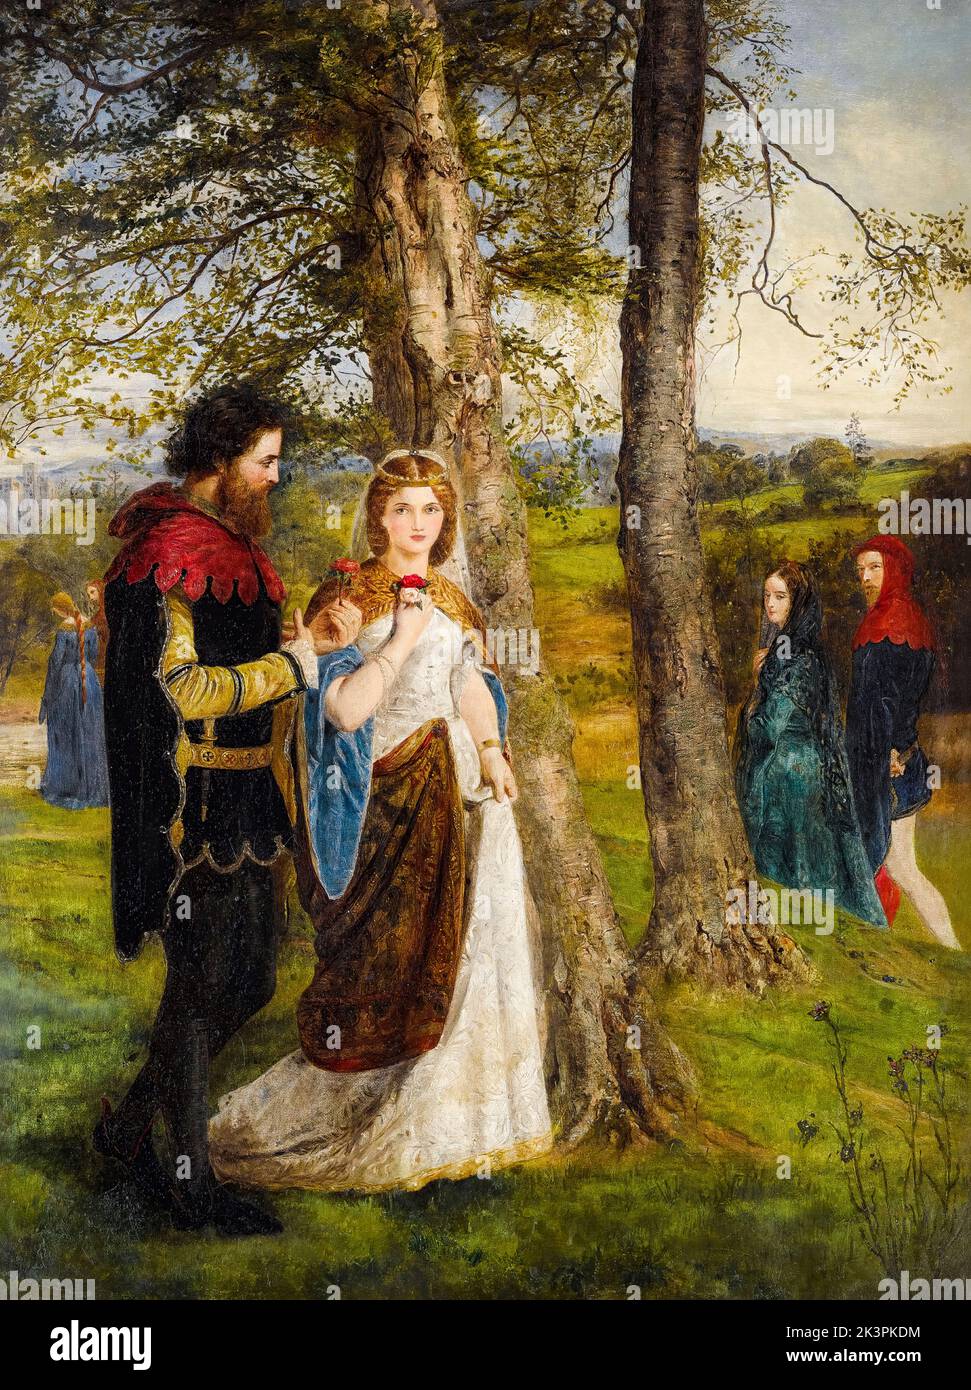 Sir Launcelot y la reina Guinevere, pintando al óleo sobre lienzo de James Archer, 1861-1868 Foto de stock